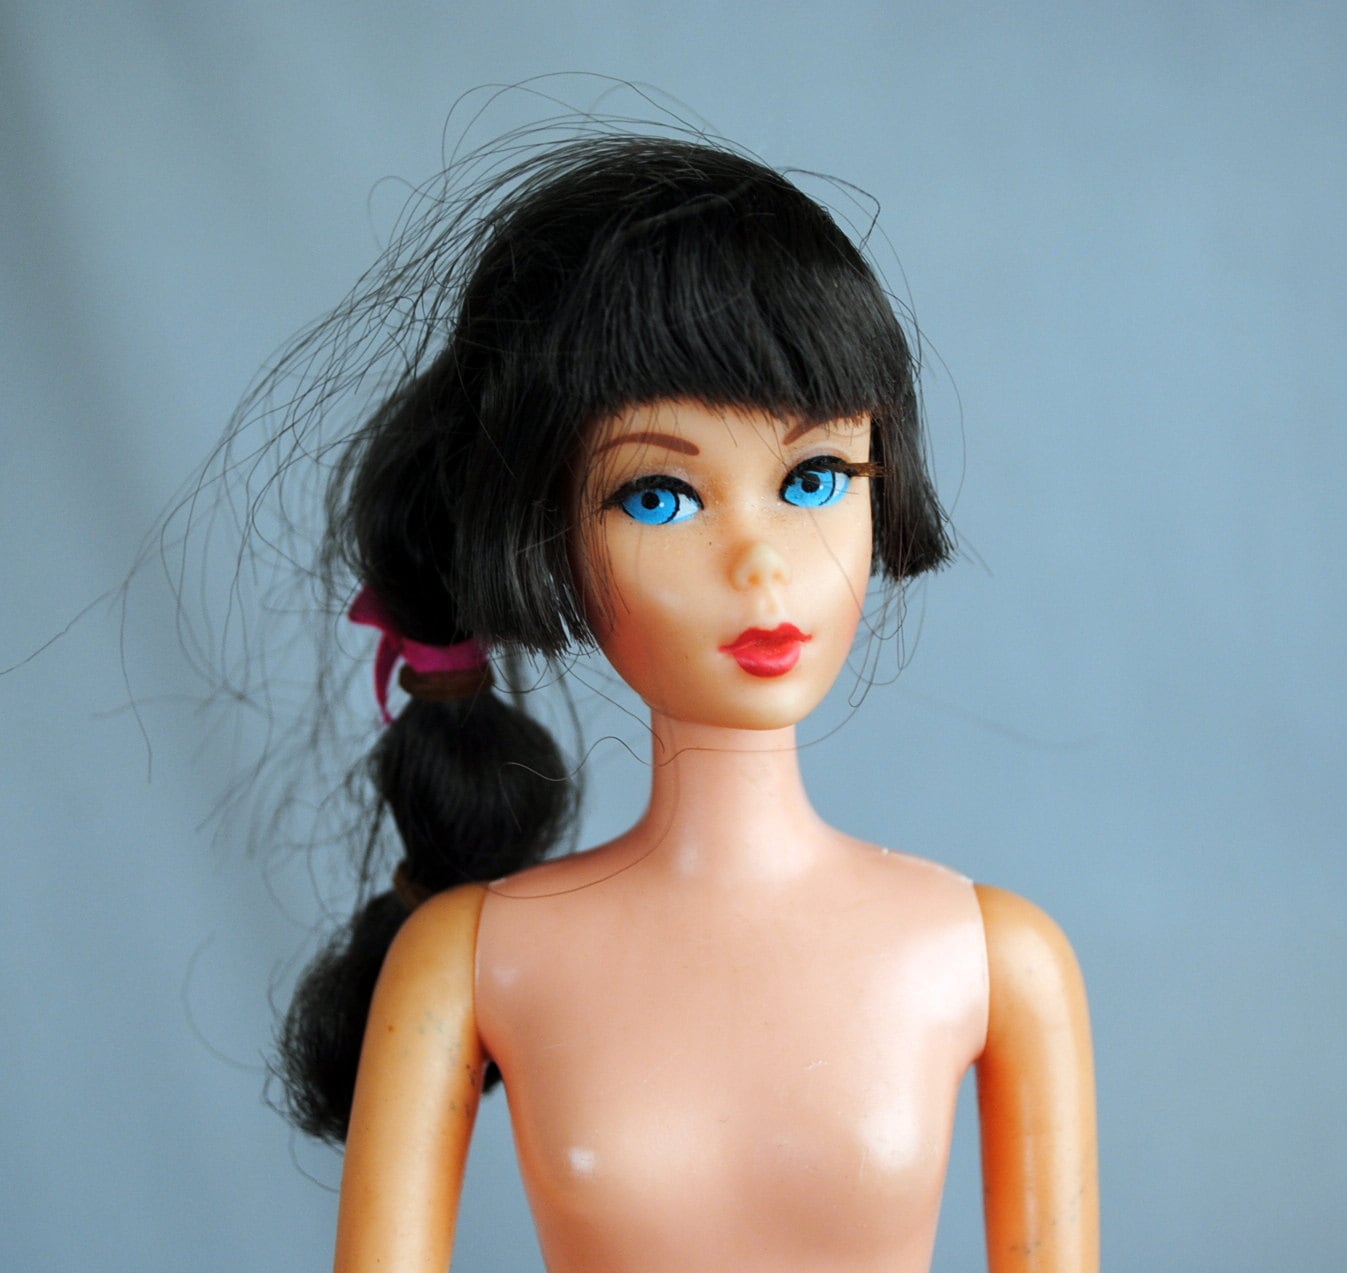 1966 barbie doll